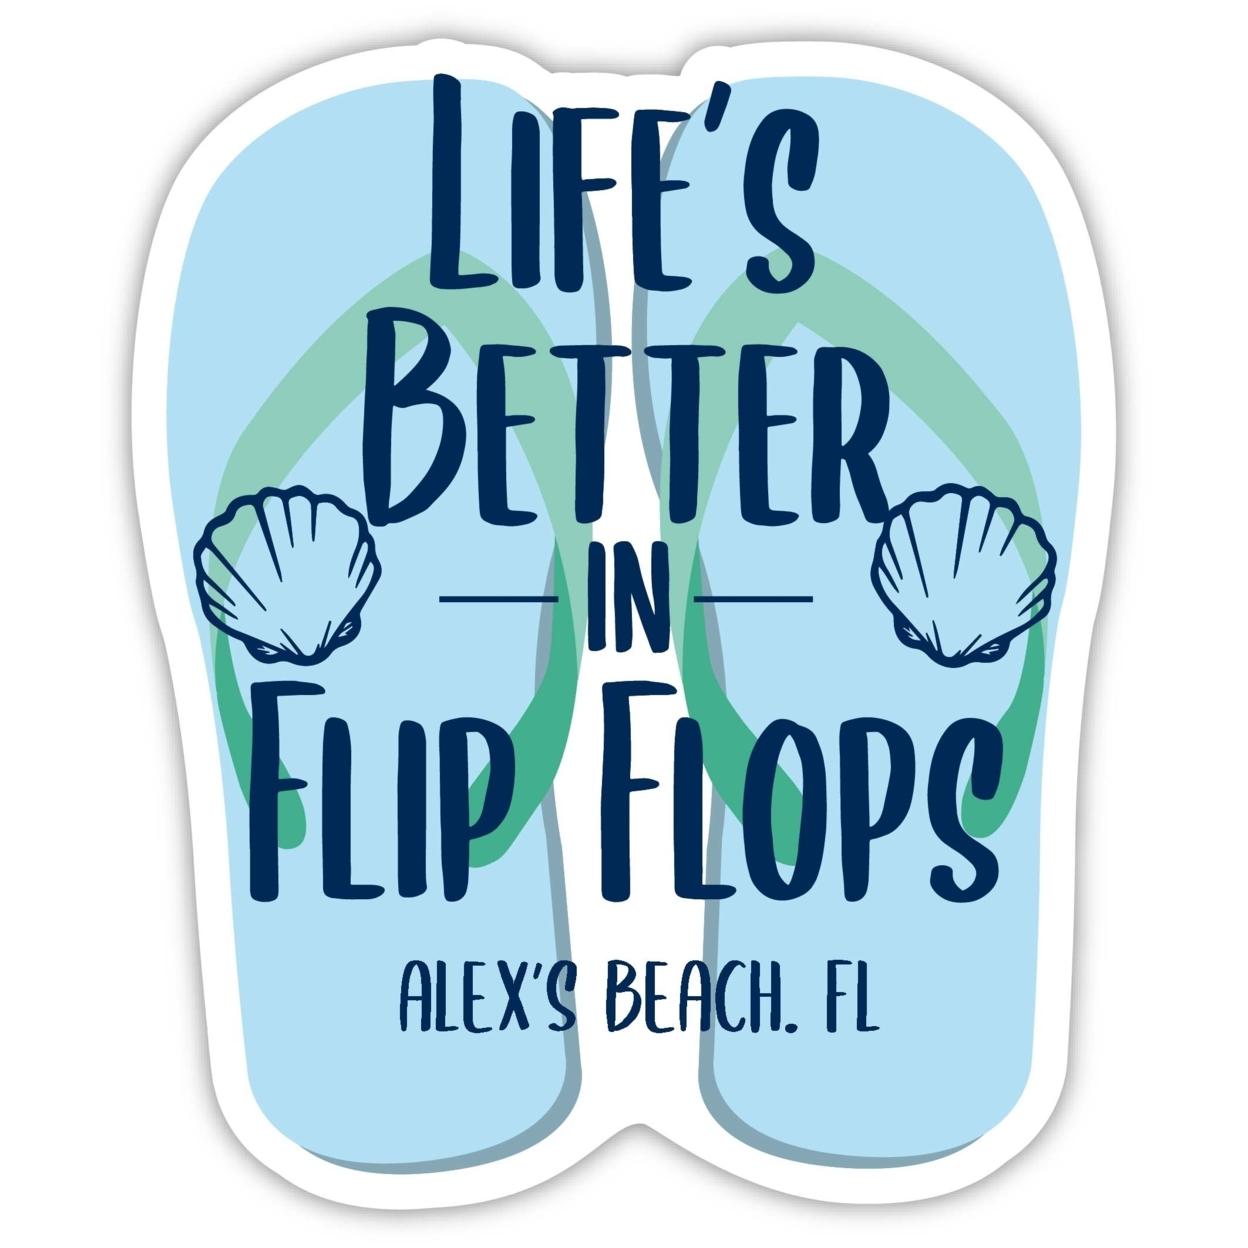 Alex's Beach Florida Souvenir 4 Inch Vinyl Decal Sticker Flip Flop Design